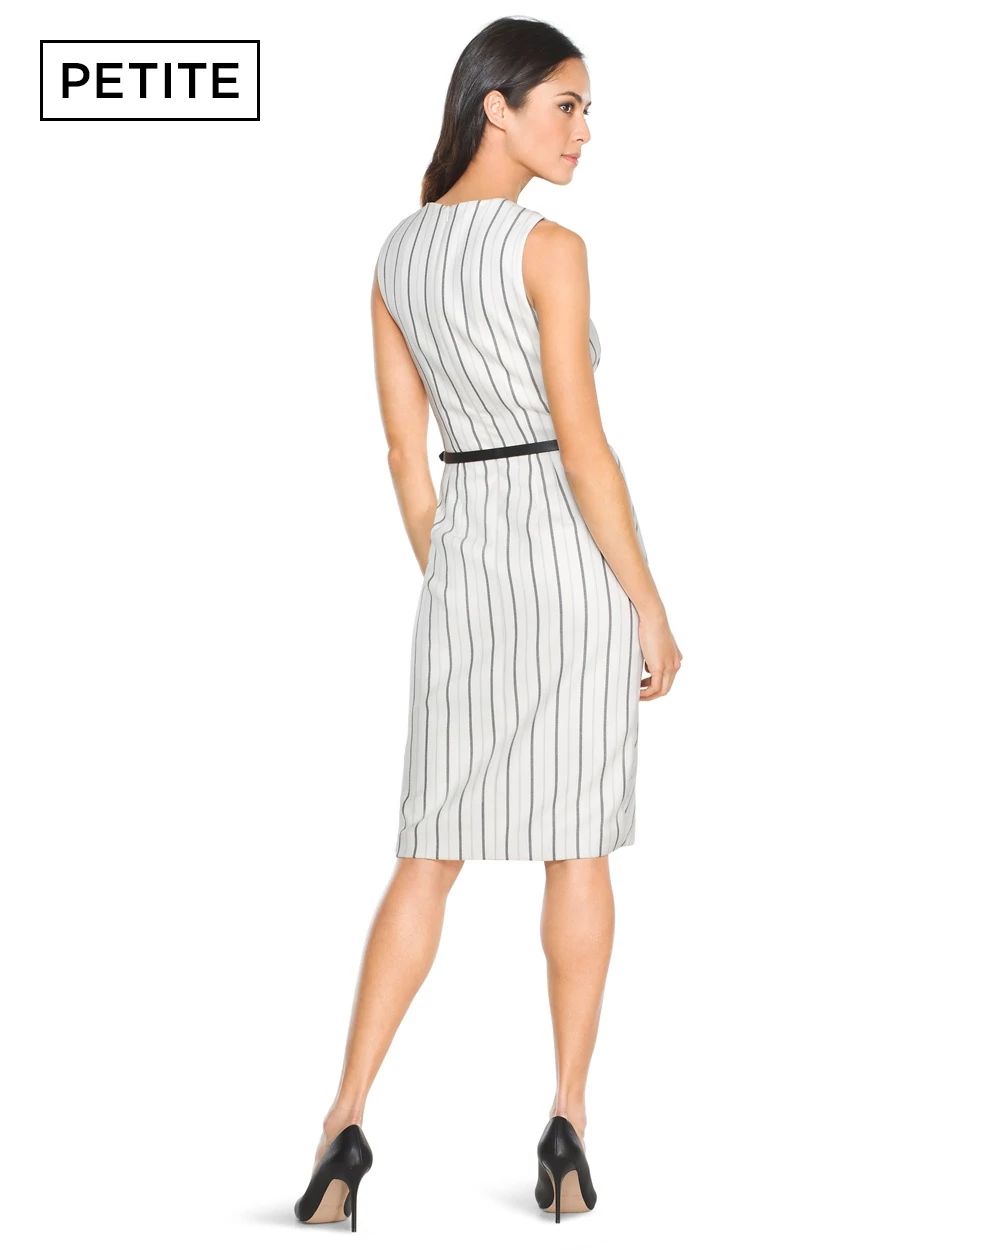 Petite Striped Asymmetric Sheath Dress click to view larger image.